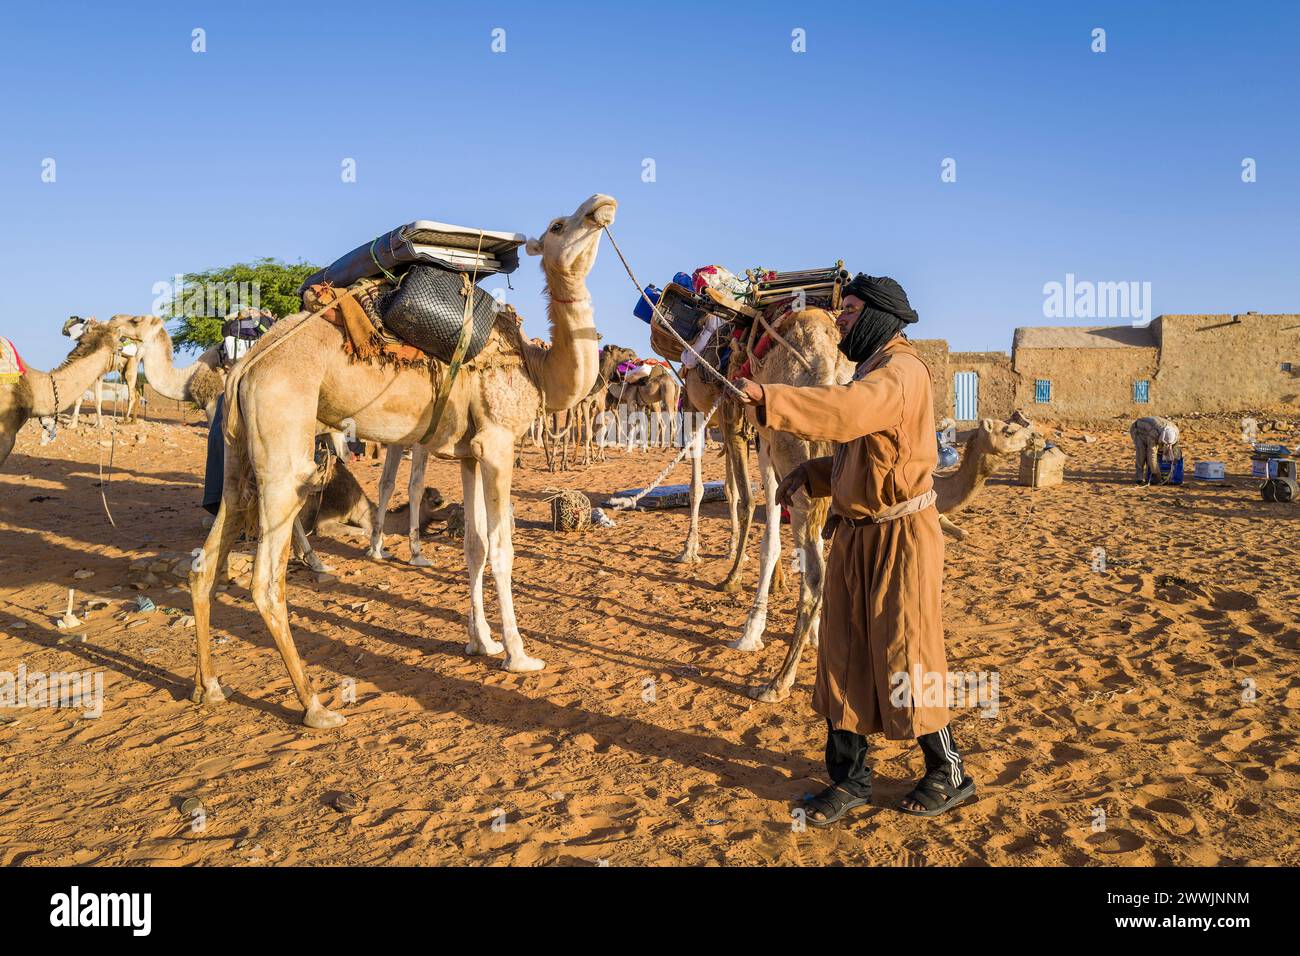 Mauritania, Chinguetti, daily life Stock Photo